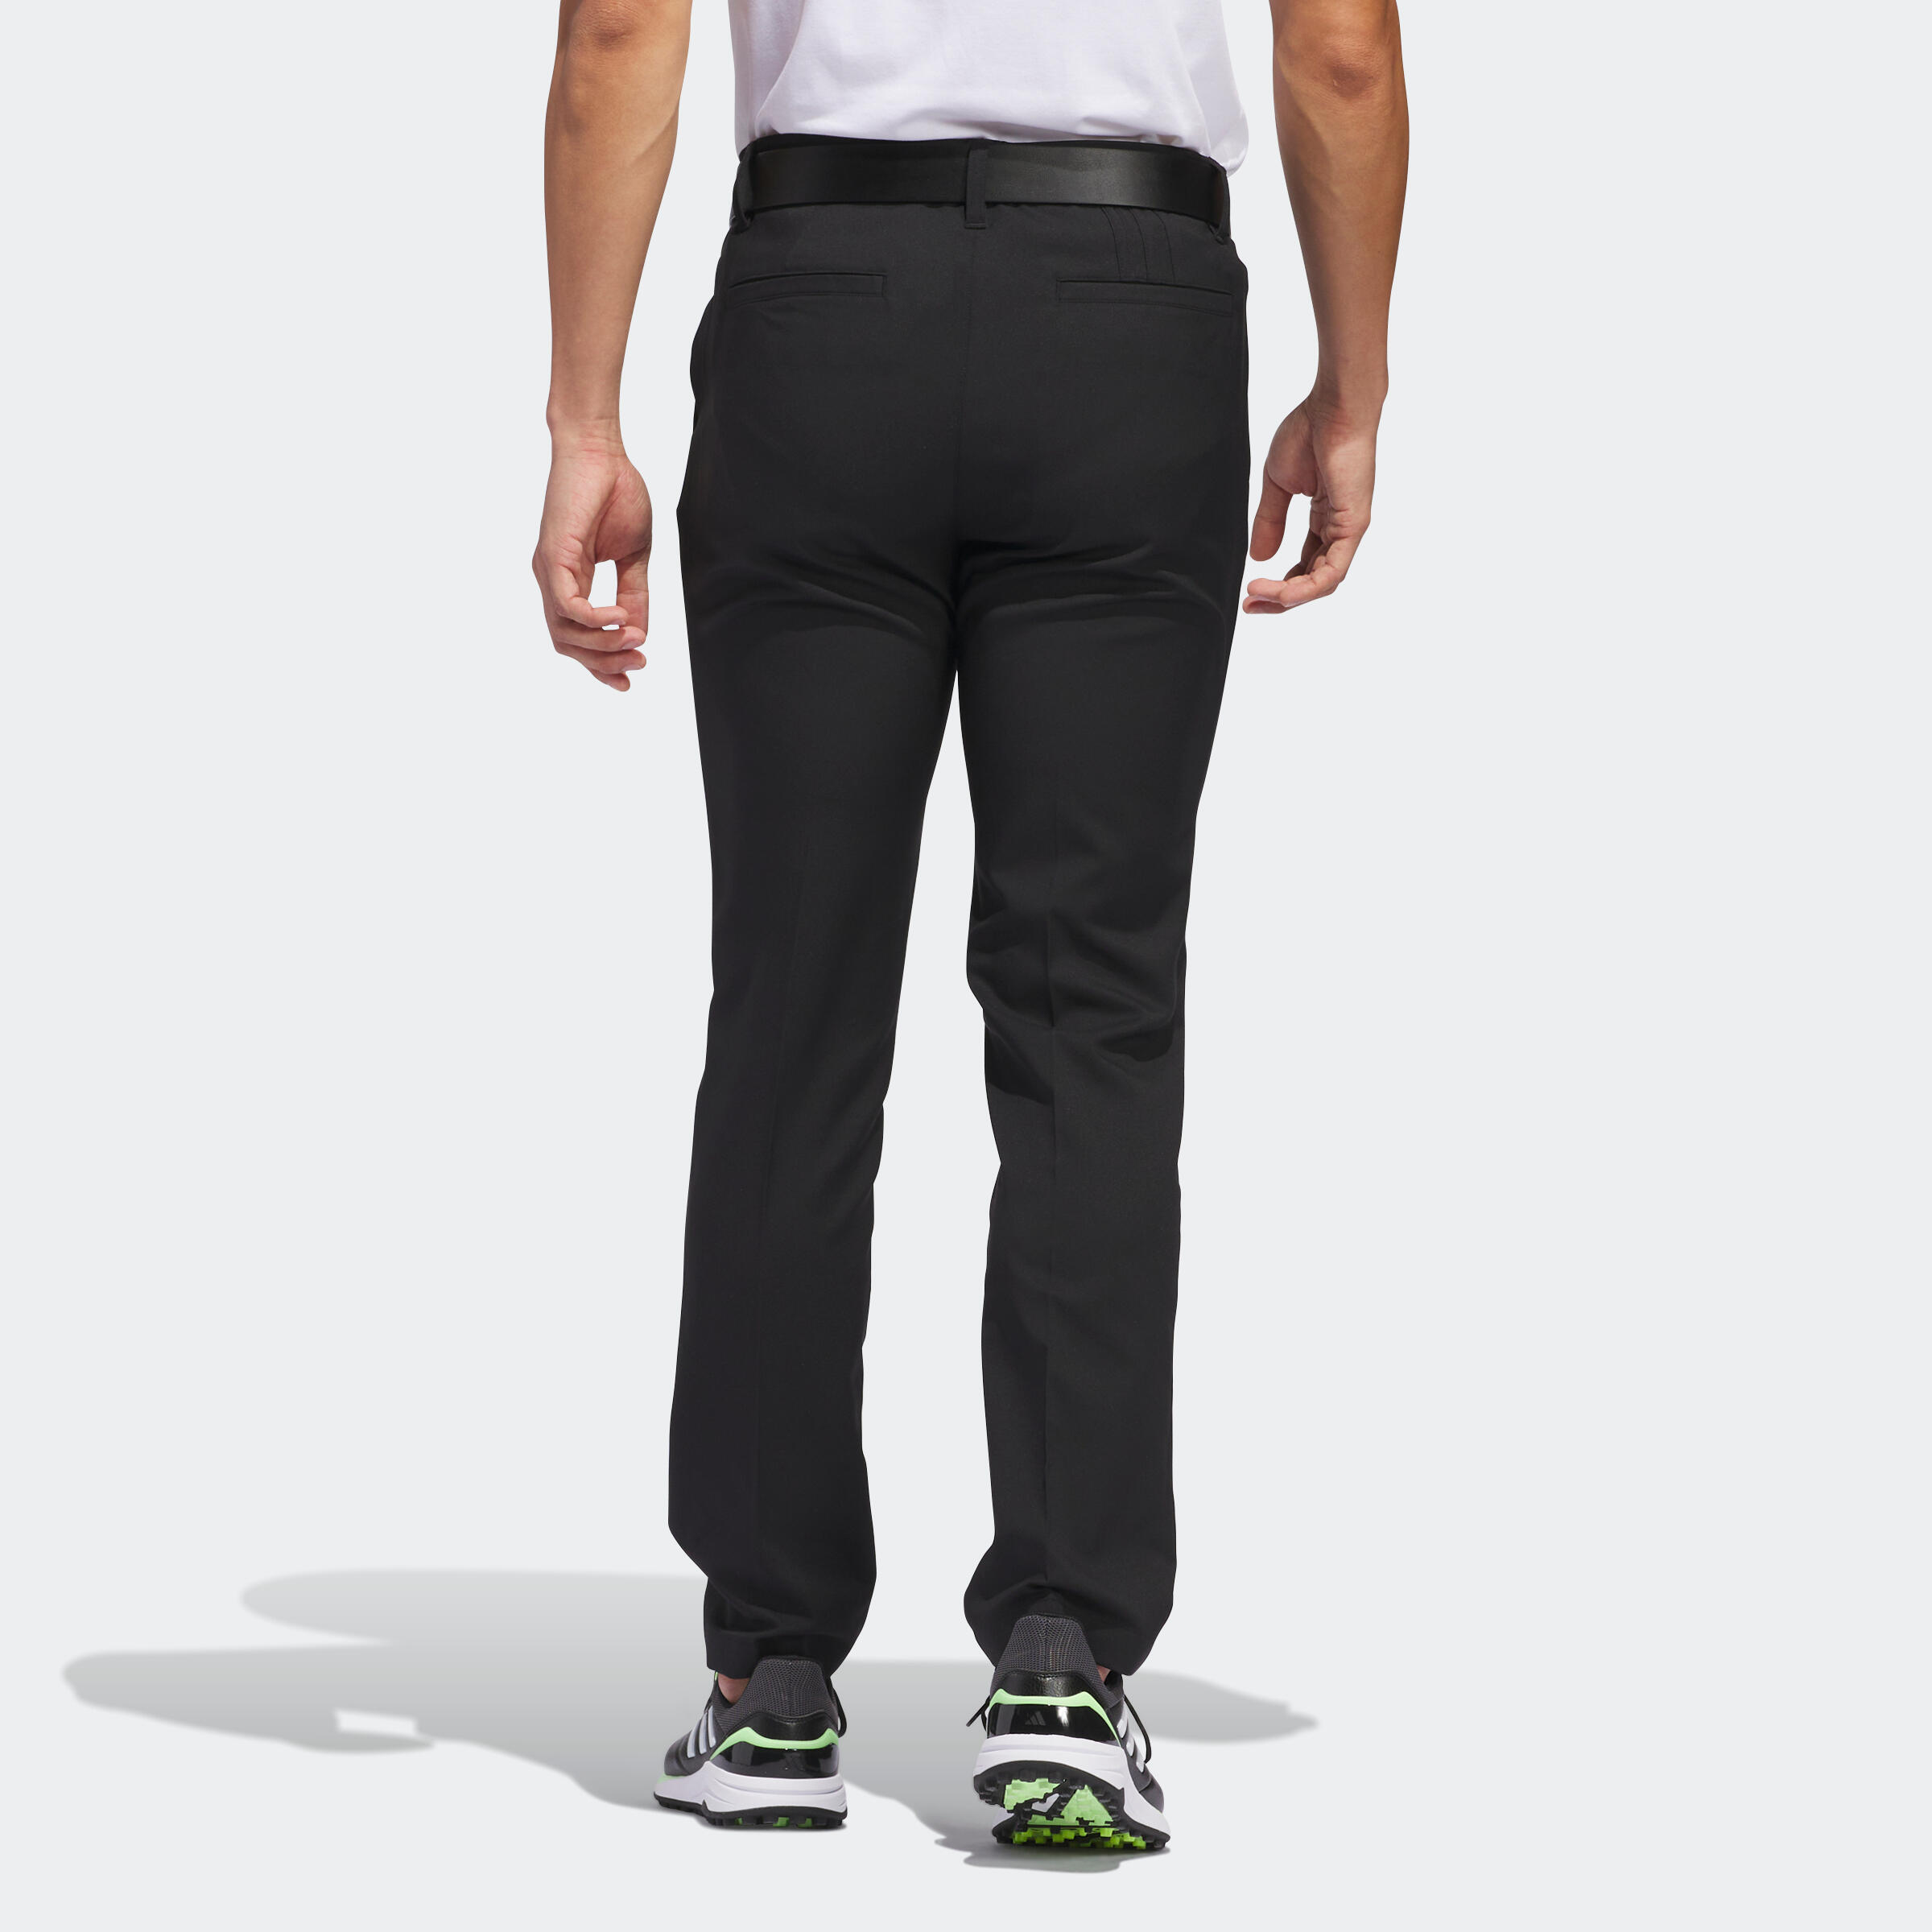 Men's golf trousers - Adidas black 2/4